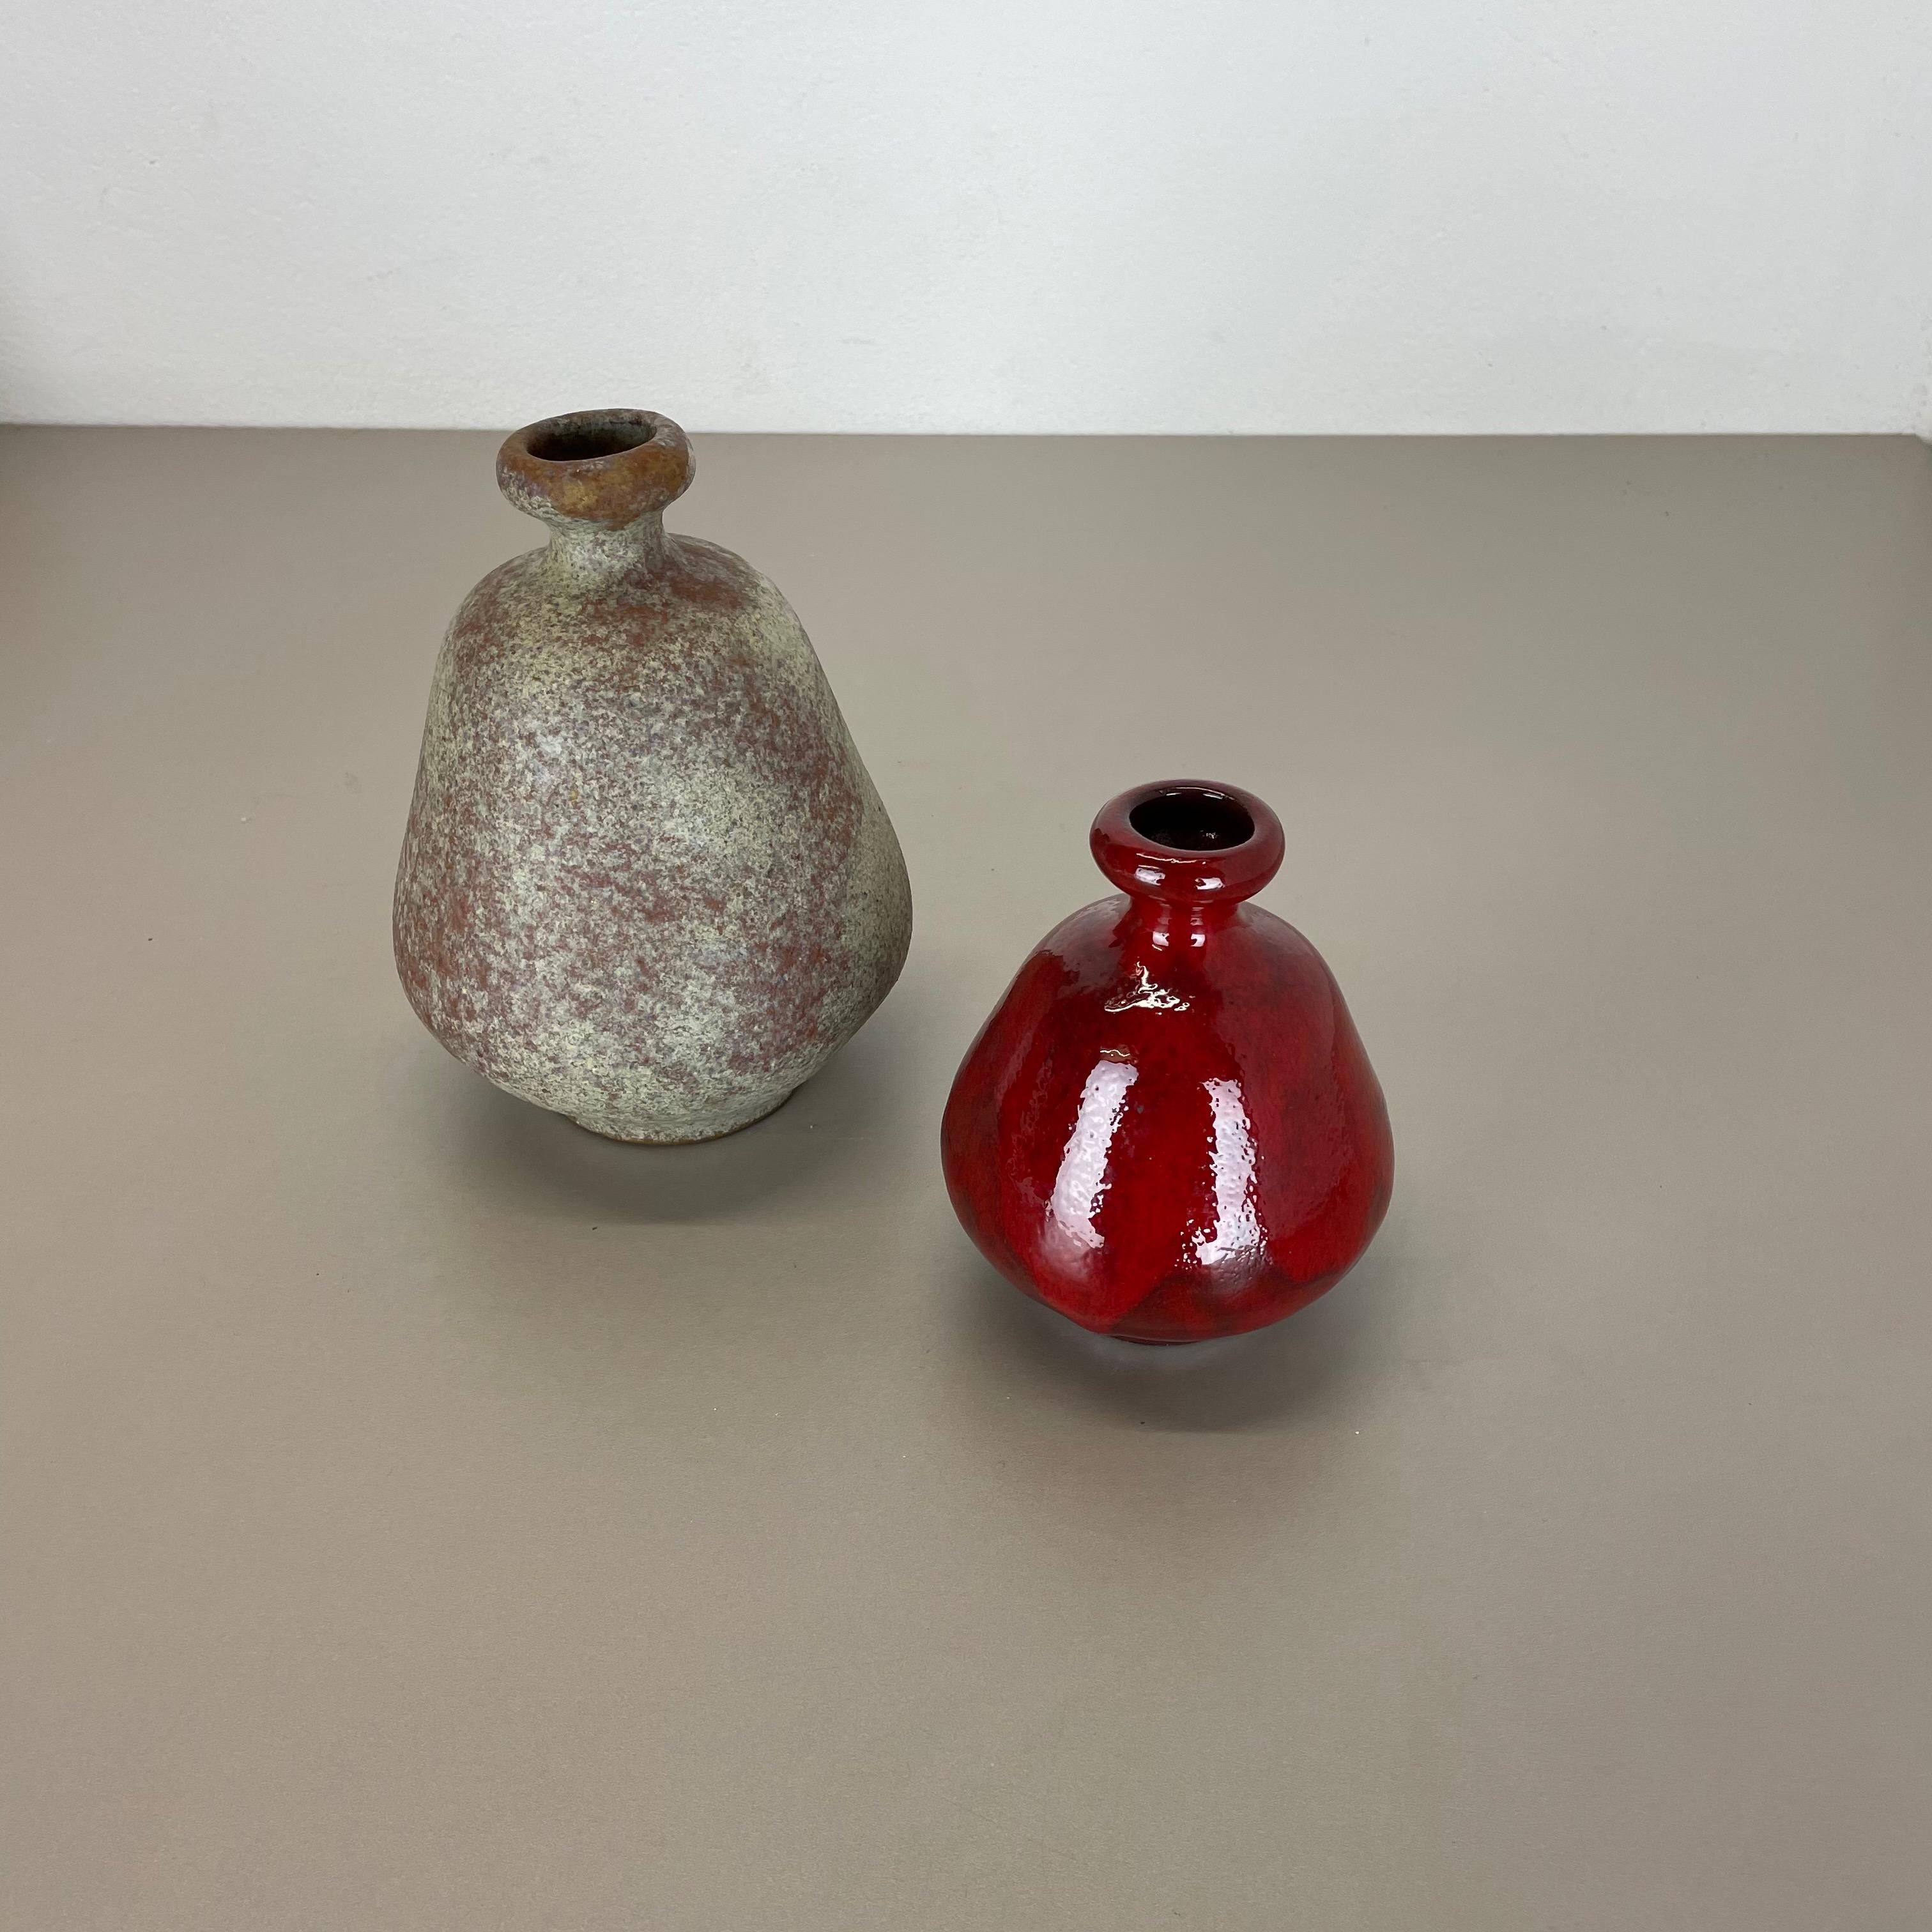 Set of 2 Ceramic Studio Pottery Vase by Hartwig Heyne Ceramics, Germany 1970s In Good Condition For Sale In Kirchlengern, DE